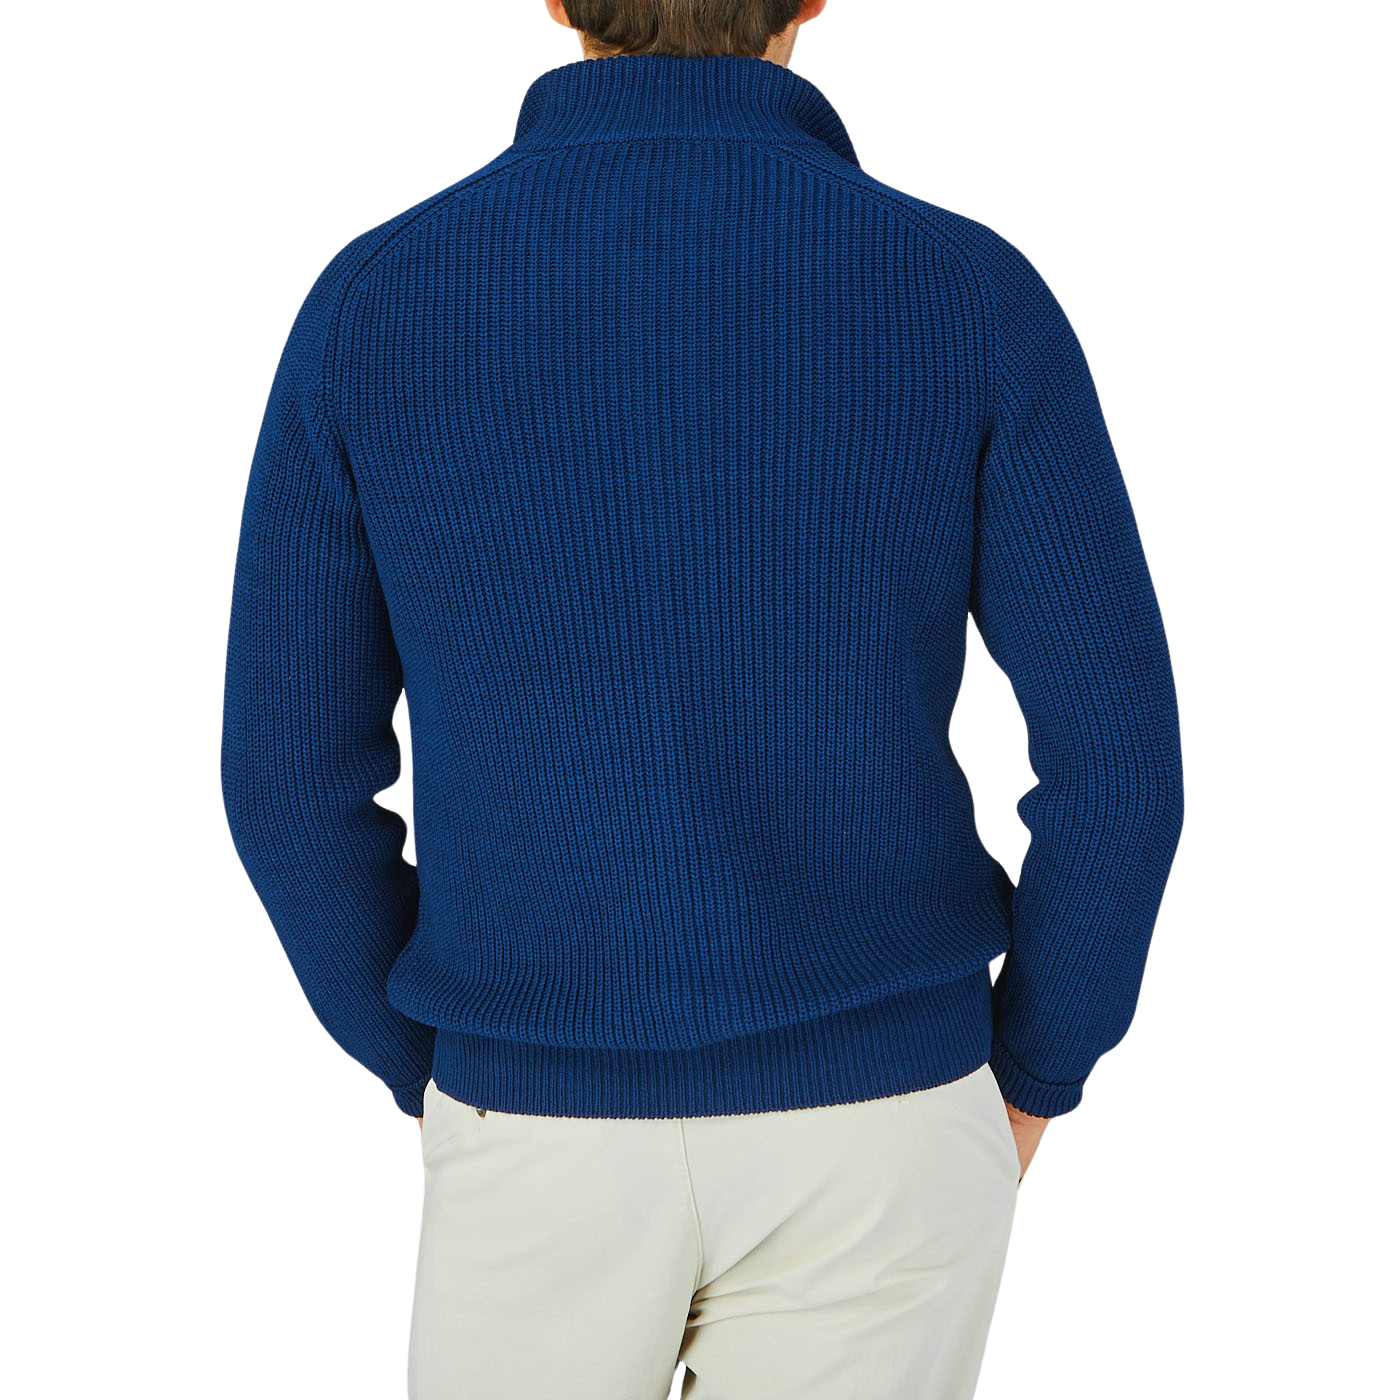 The back view of a man wearing a Gran Sasso Dark Blue Rib Stitch Cotton Full-Zip Sweater.